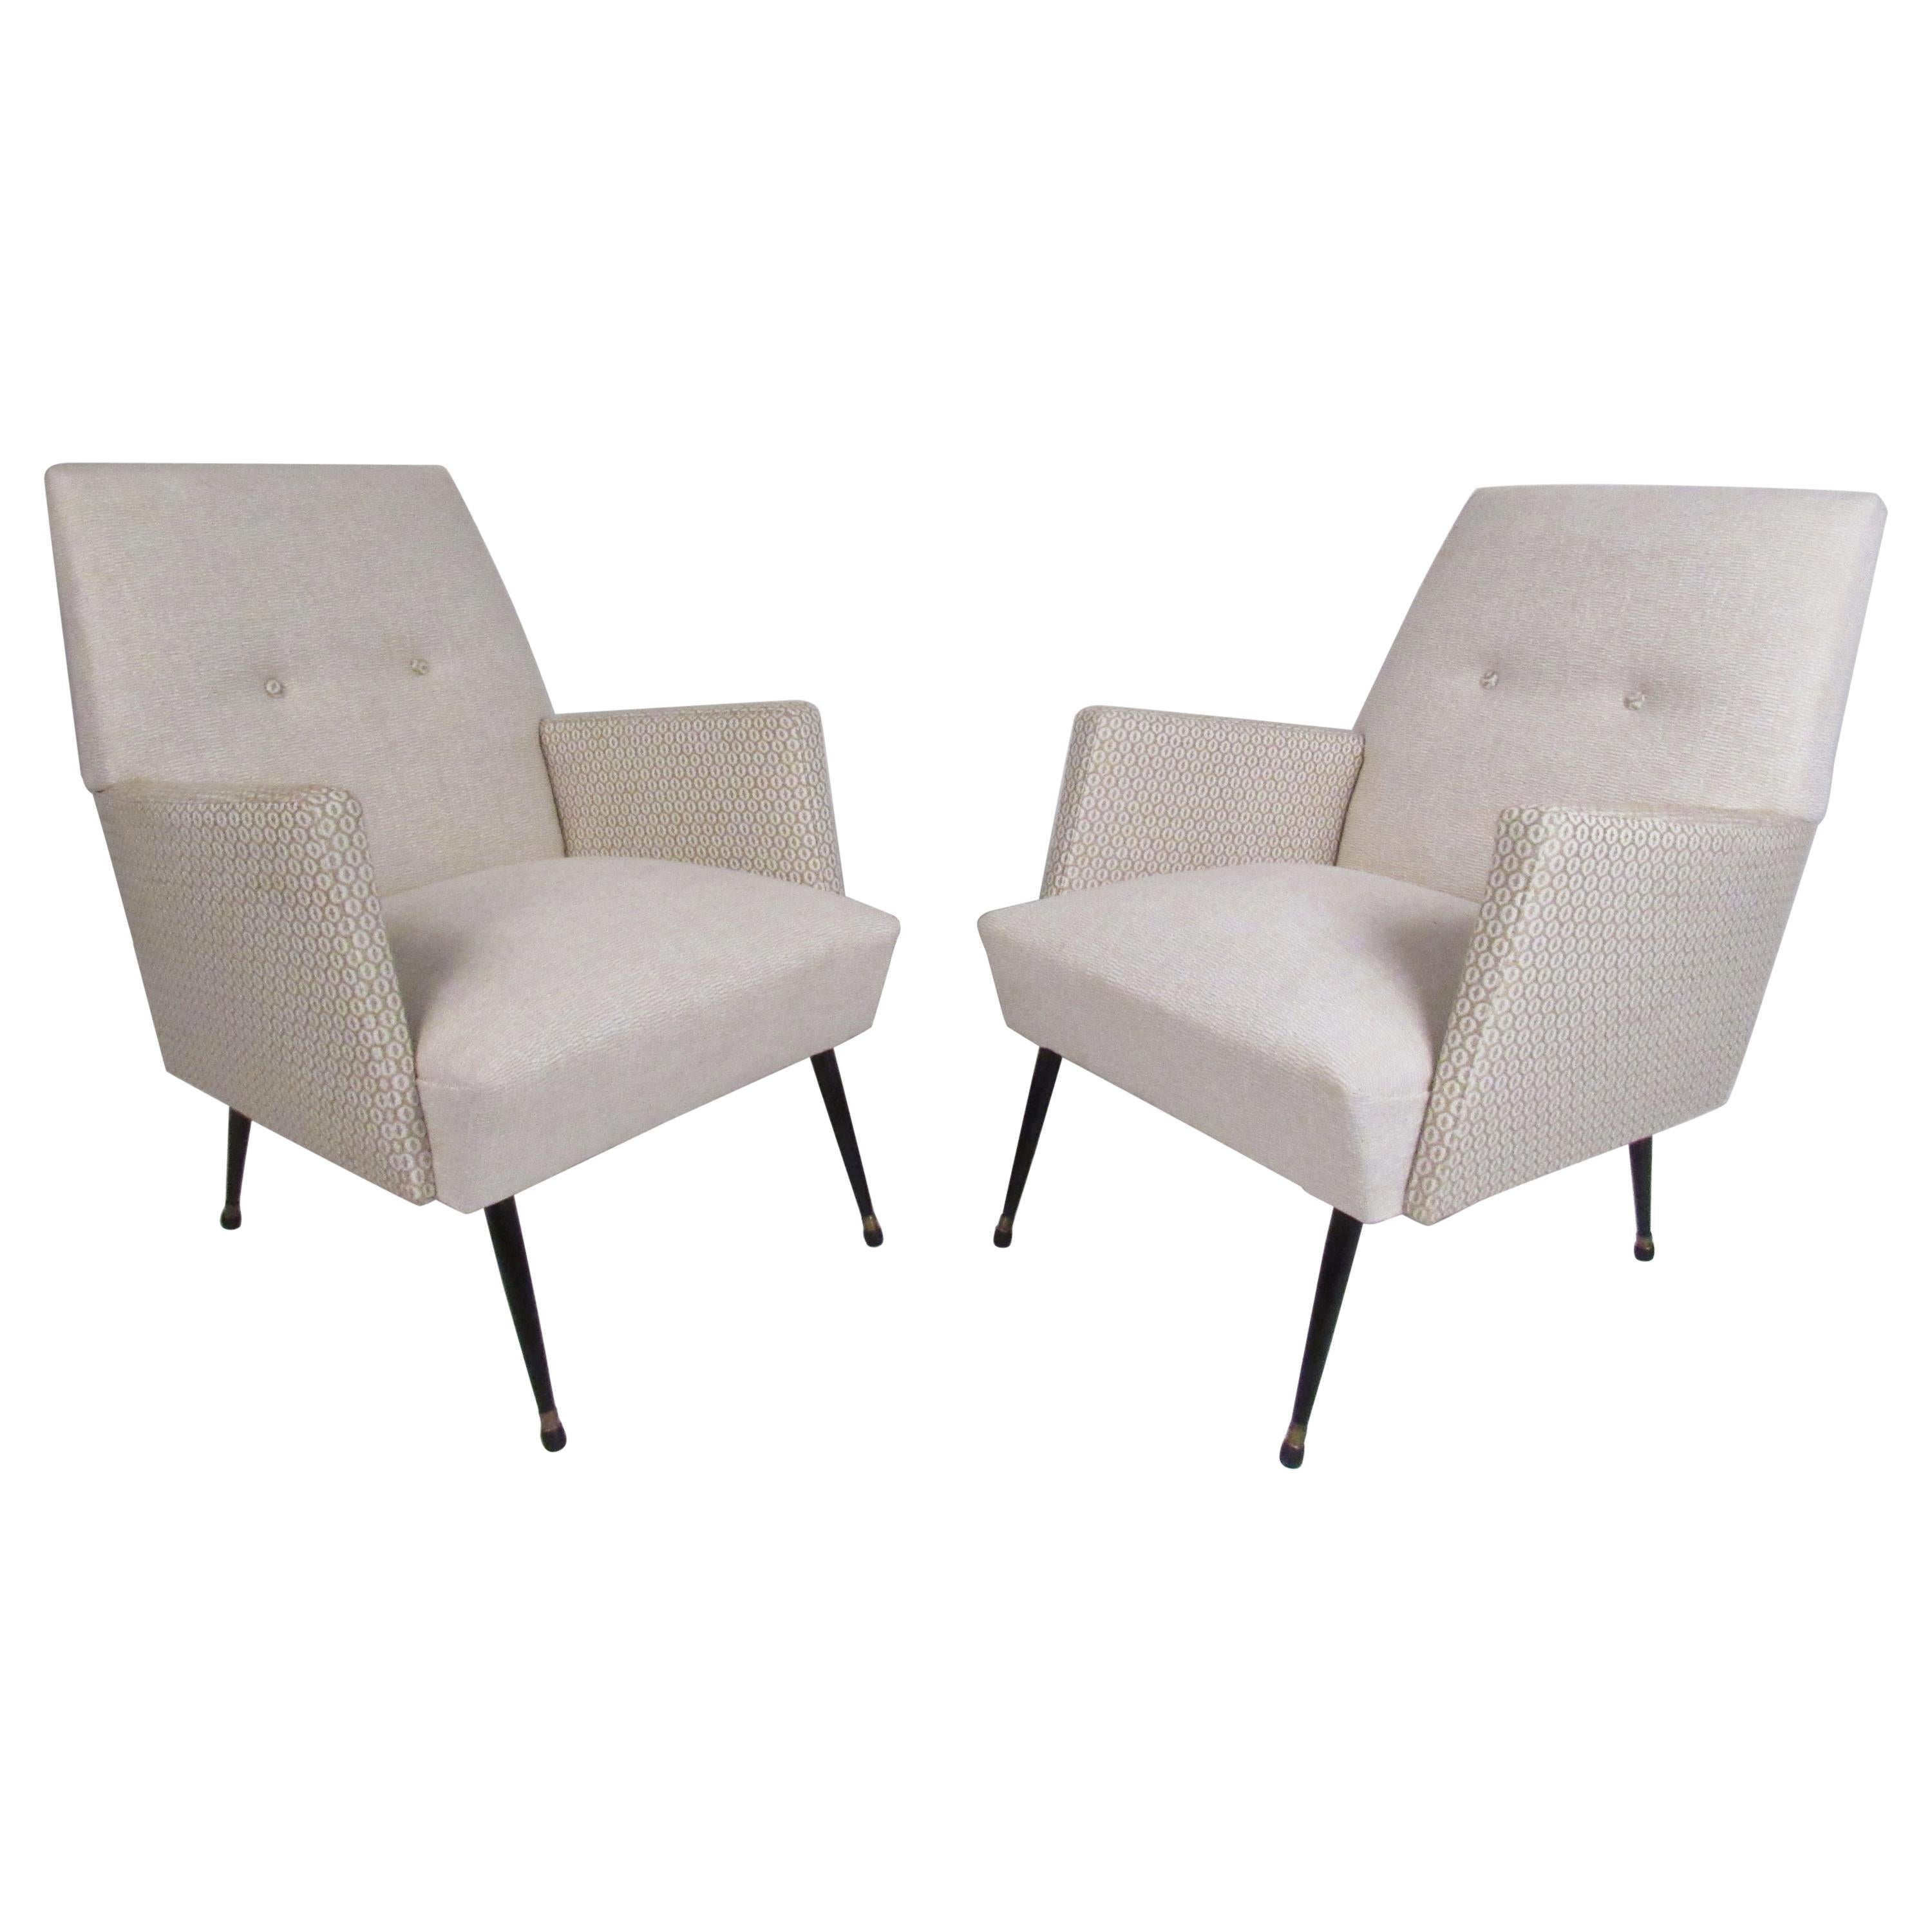 Pair of Mid-Century Modern Italian Lounge Chairs